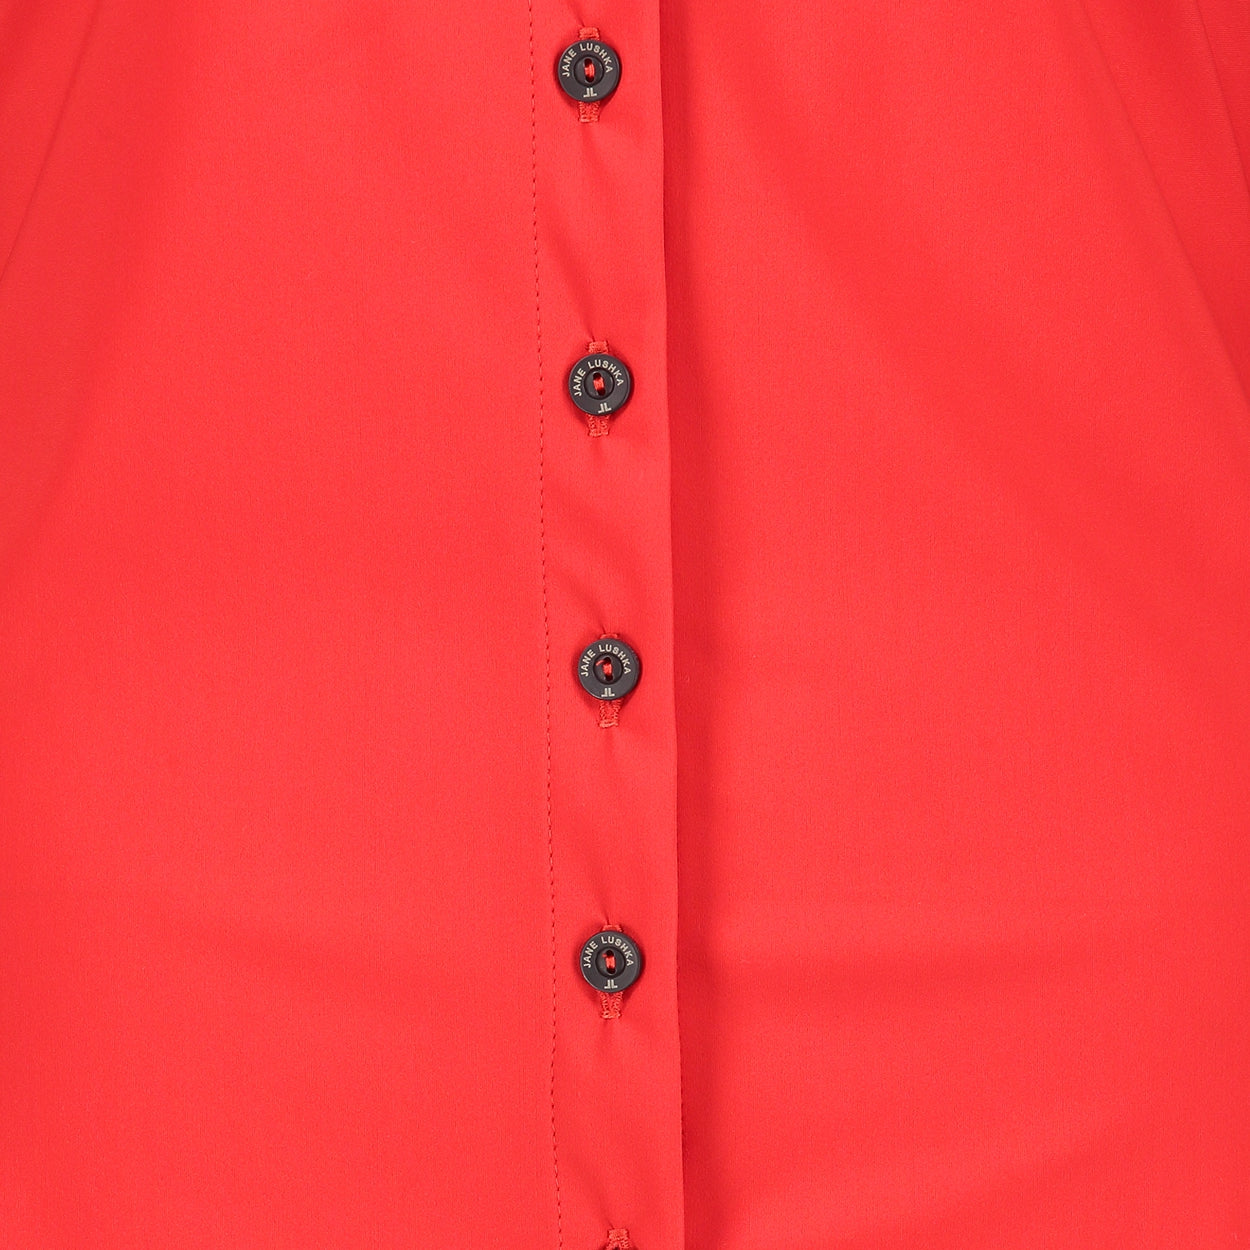 Kikkie Blouse Technical Jersey | Red